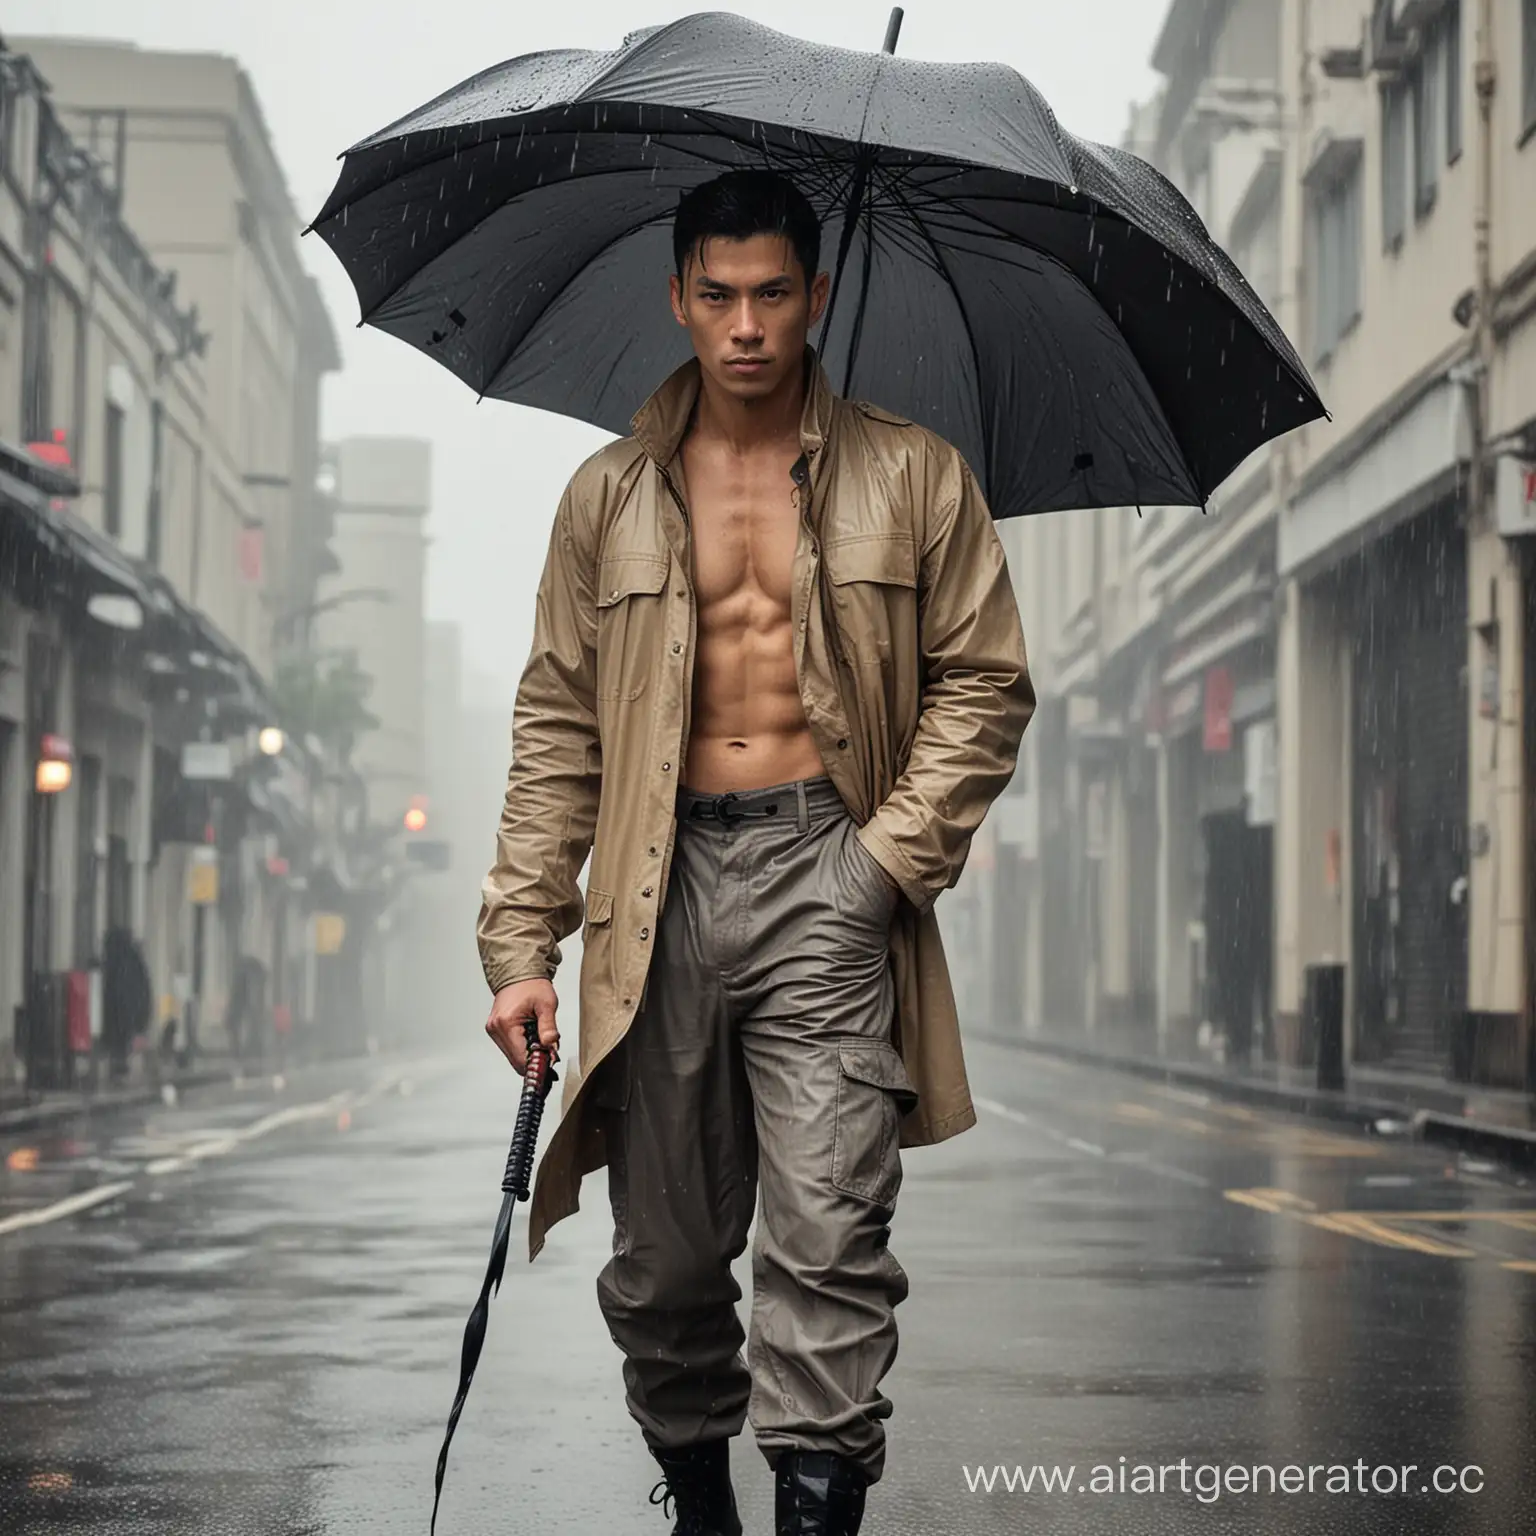 Man-with-Katana-Umbrella-on-Rainy-Street